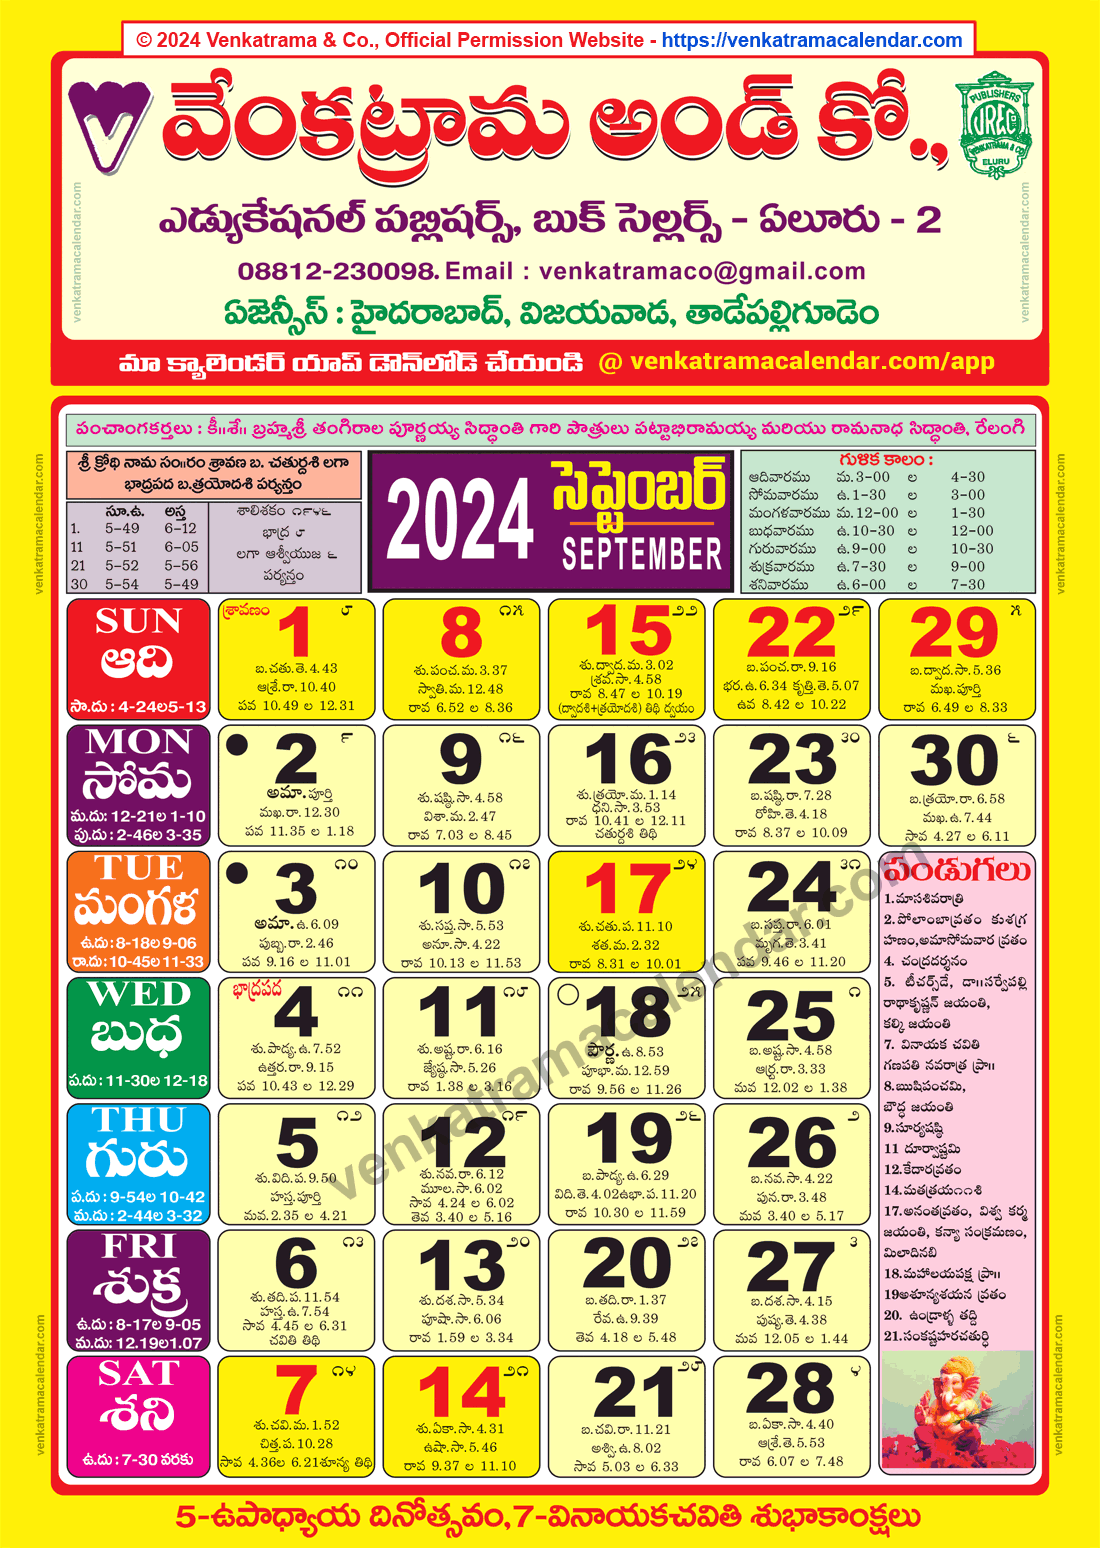 Venkatrama Calendar 2024 September